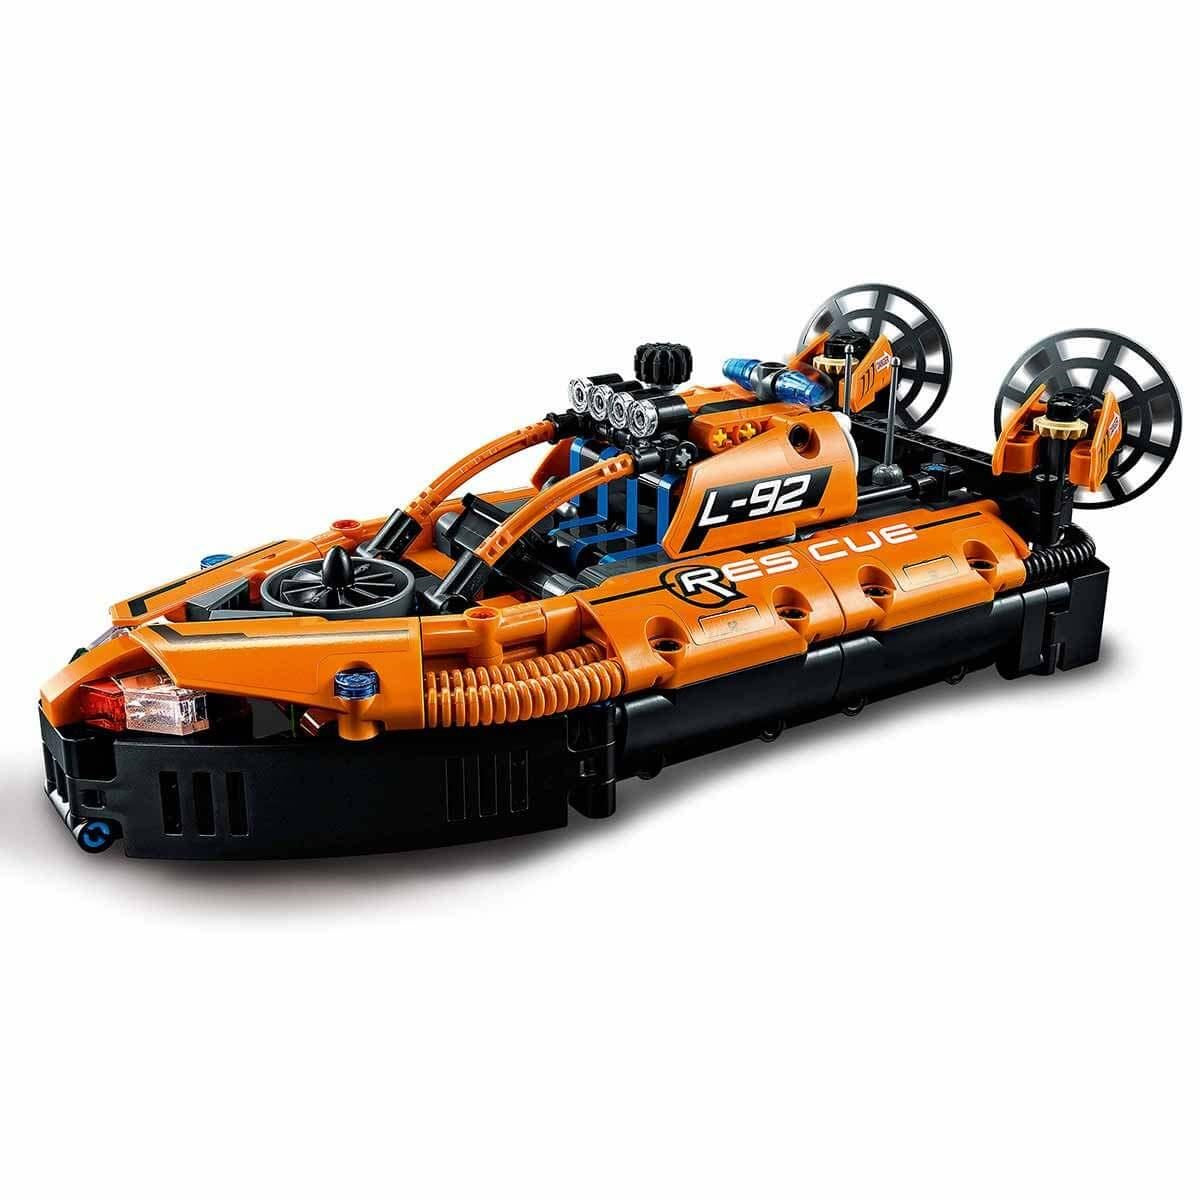 Lego Technic Kurtarma Hoverkraftı 42120 | Toysall